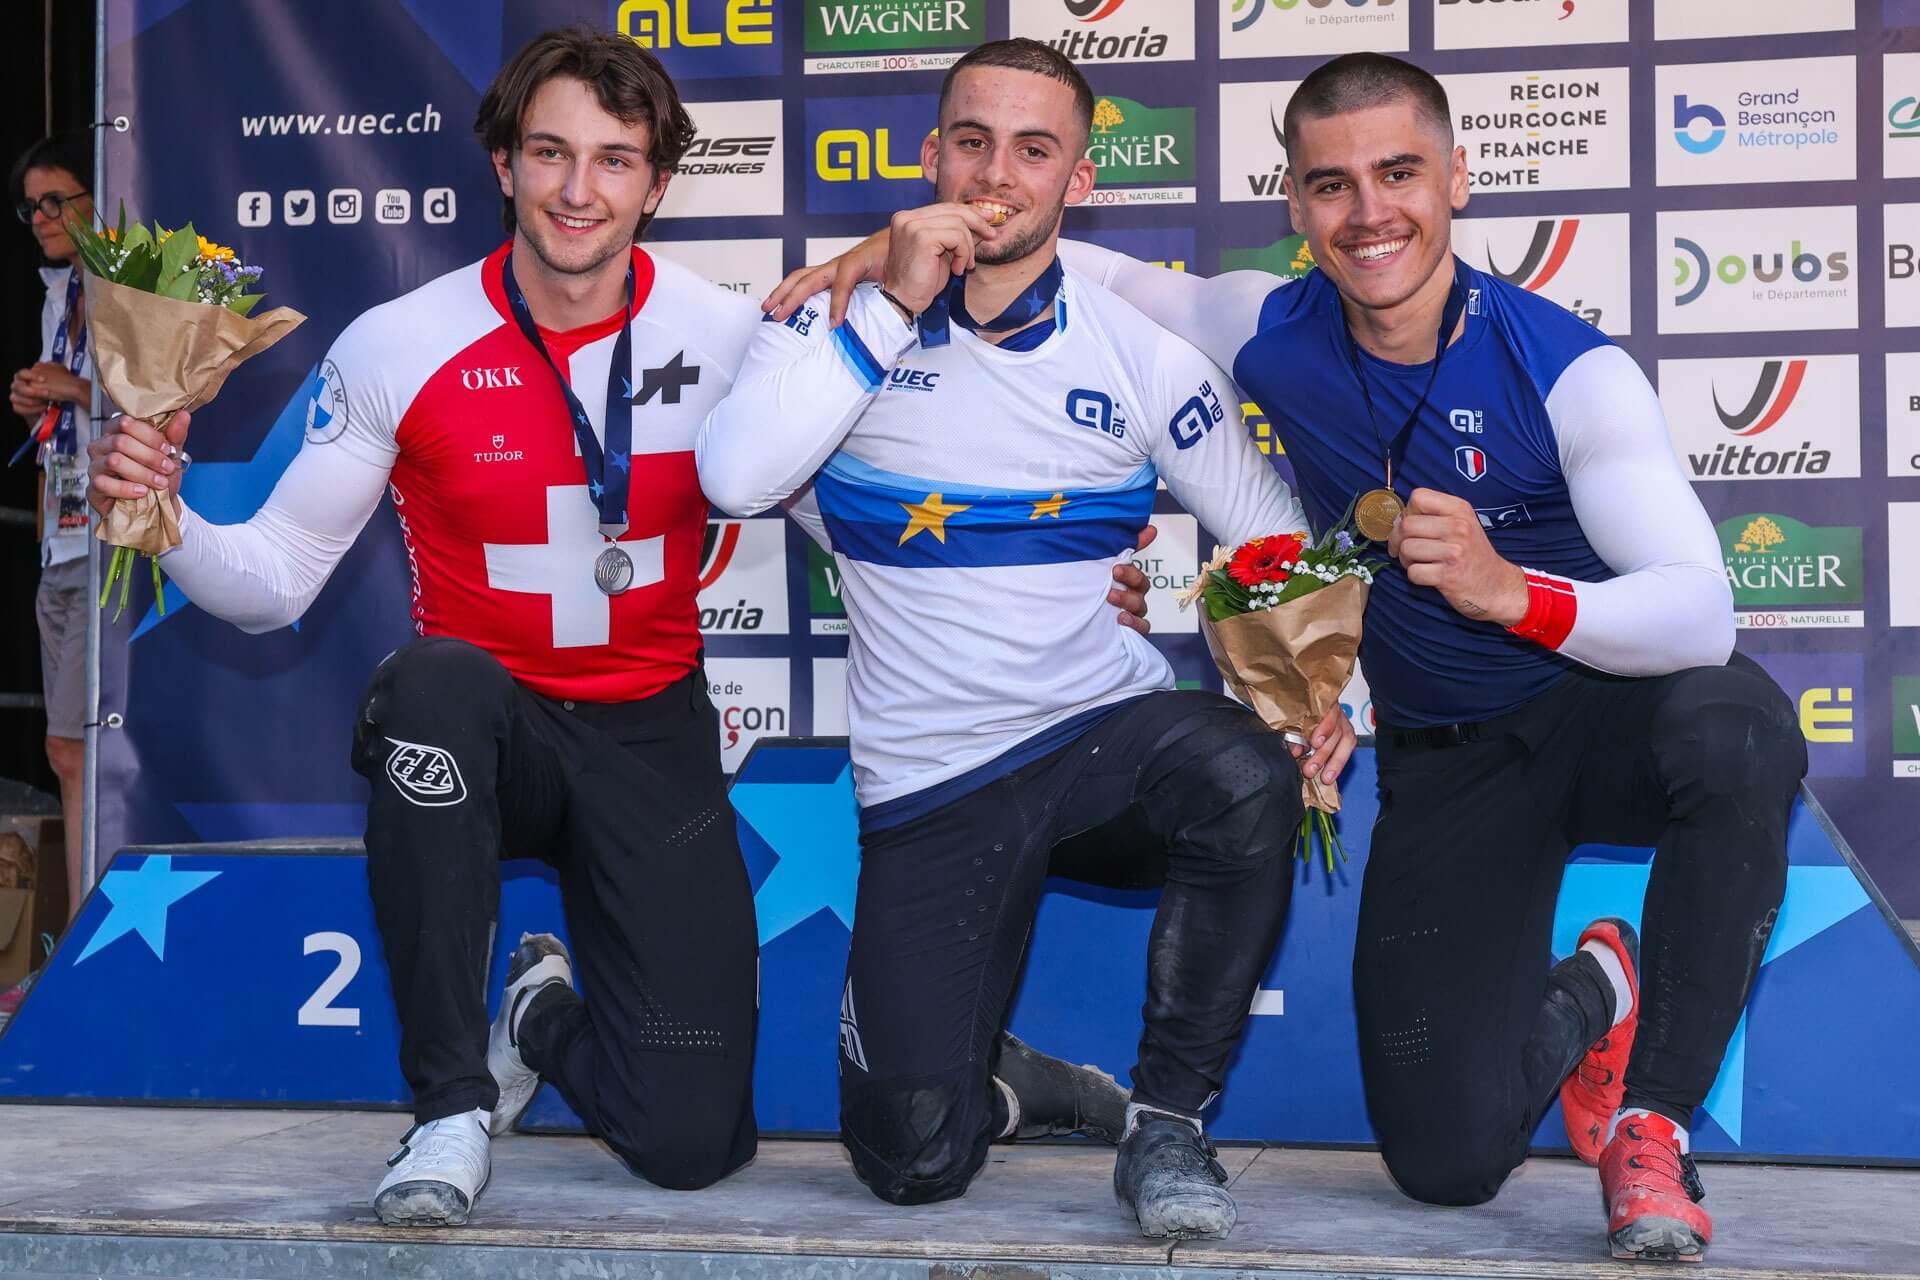 U23 Men Podium 2 - 2023 UEC European Championships France - Sprint Cycling